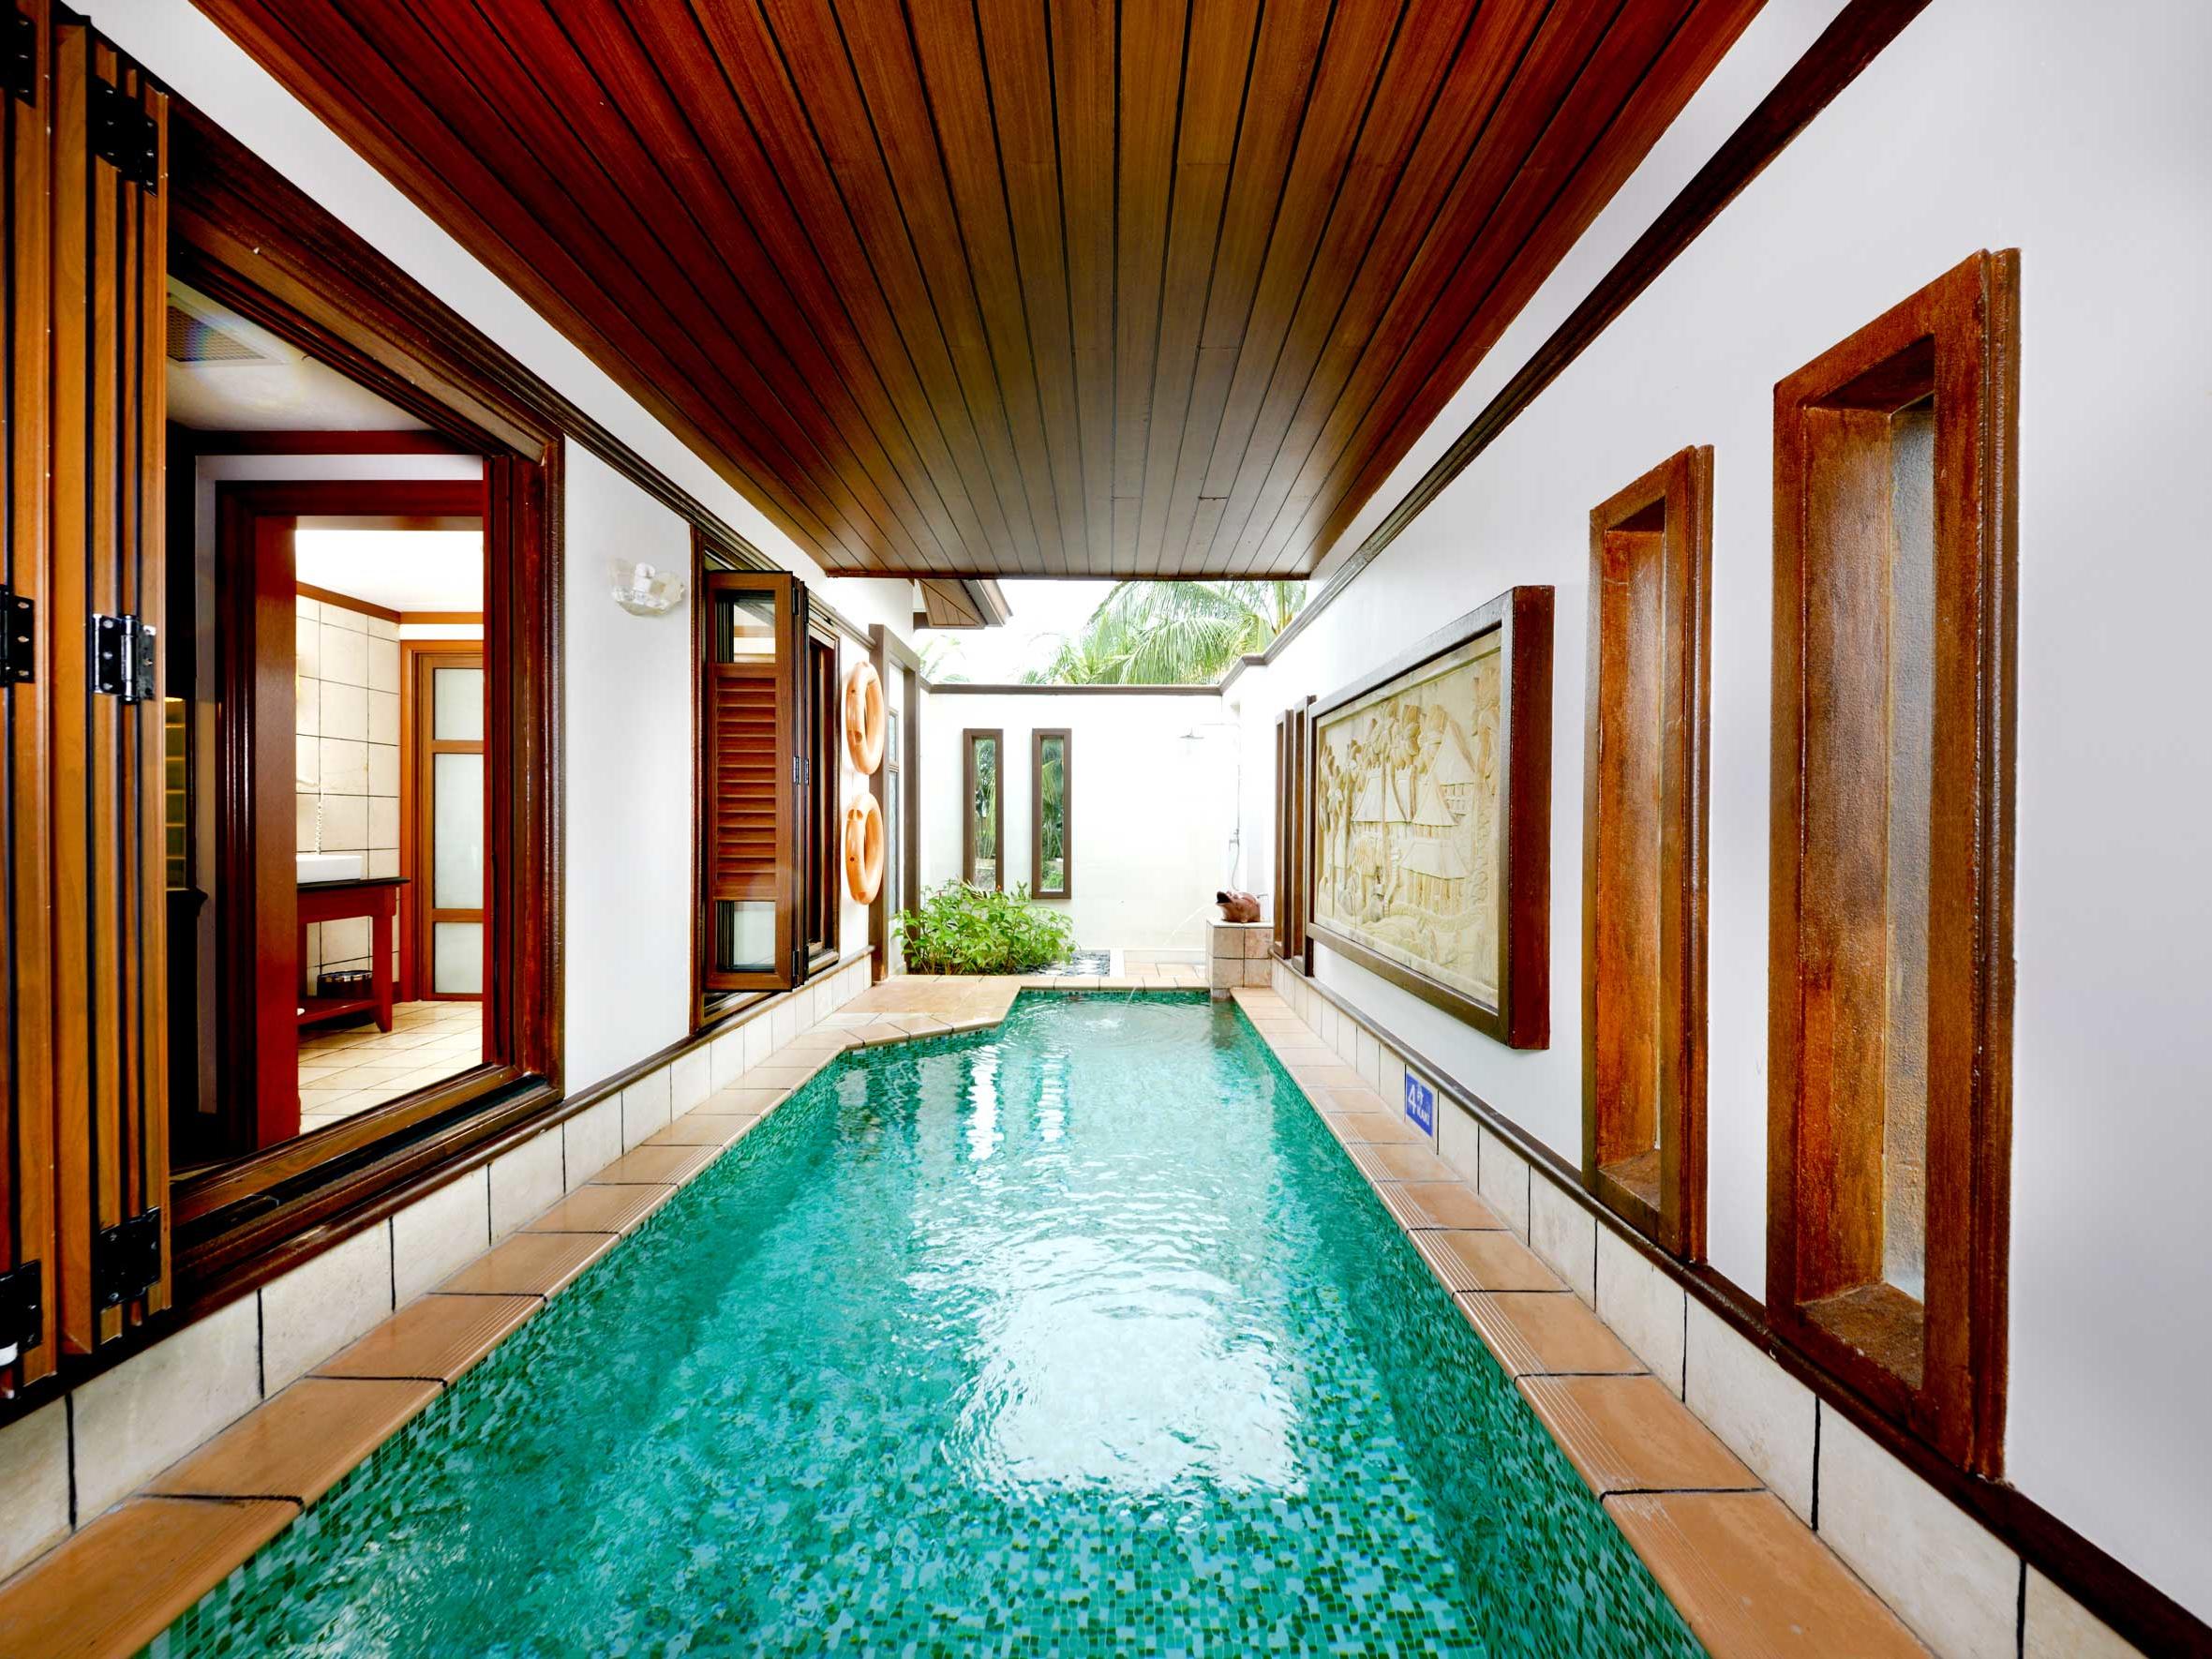 Executive Pool Villa | Port Dickson Hotel With Private Pool - Hotel In Pd With Private Pool